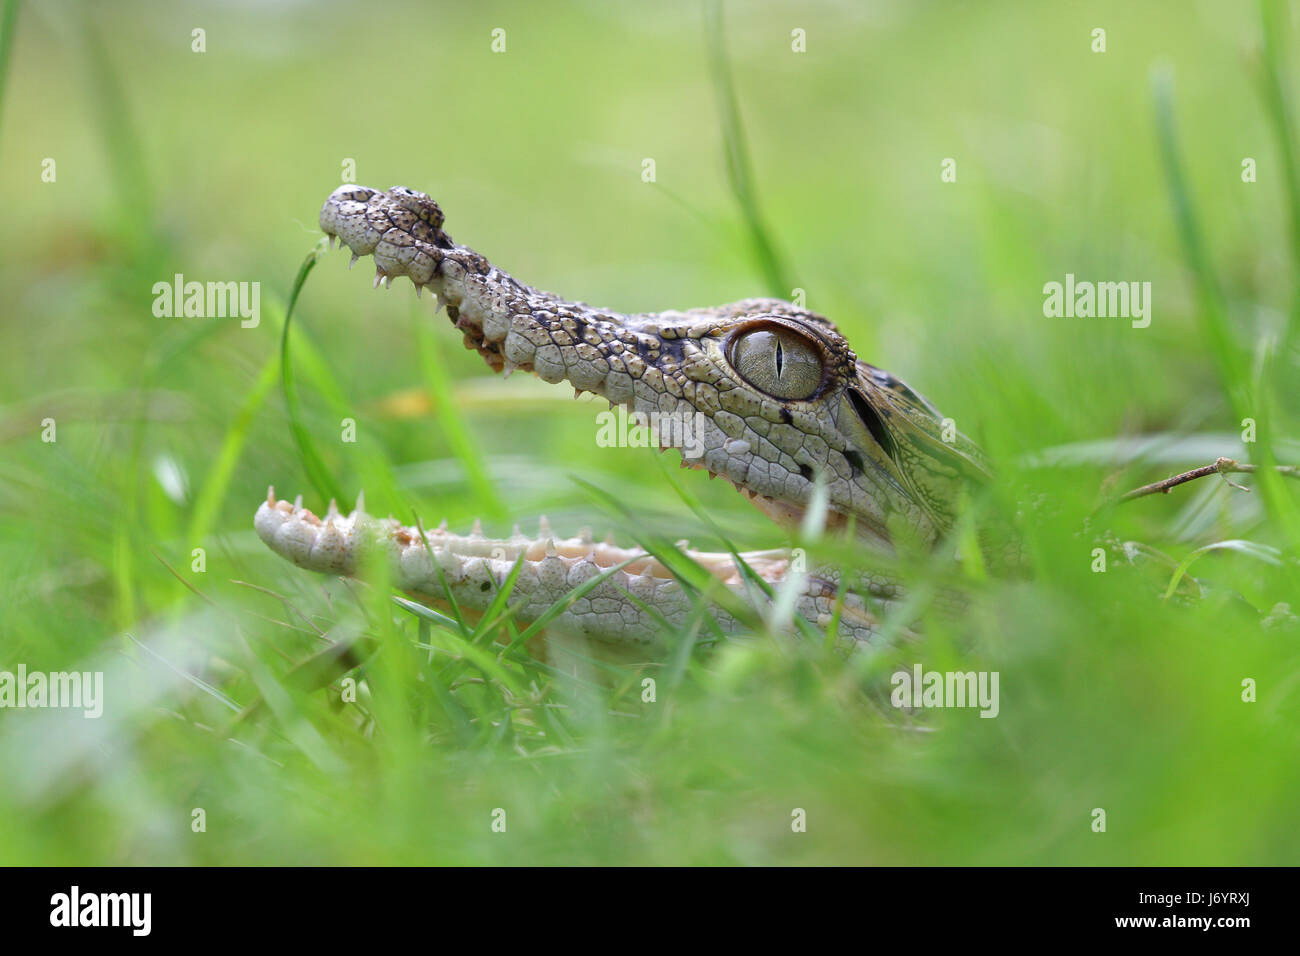 Crocodile hidden in the grass, Indonesia Stock Photo